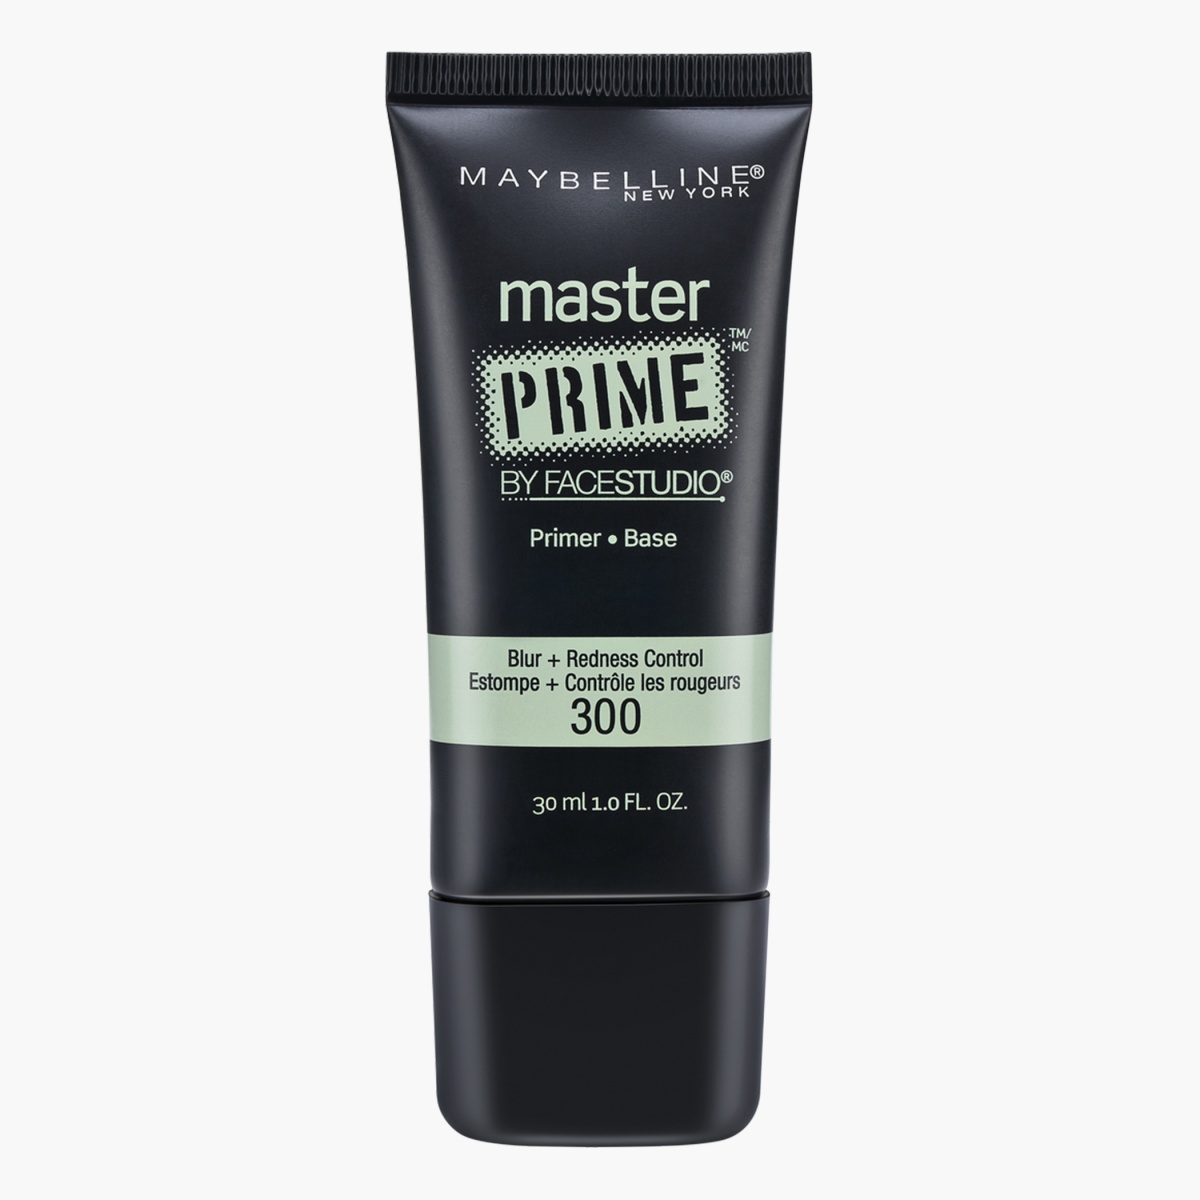 Master prime. Maybelline New York Master Prime. Maybelline face Studio Prime. Maybelline Master primer for oily Skin. Купить Maybelline New York Facestudio Mast Prime Blur.